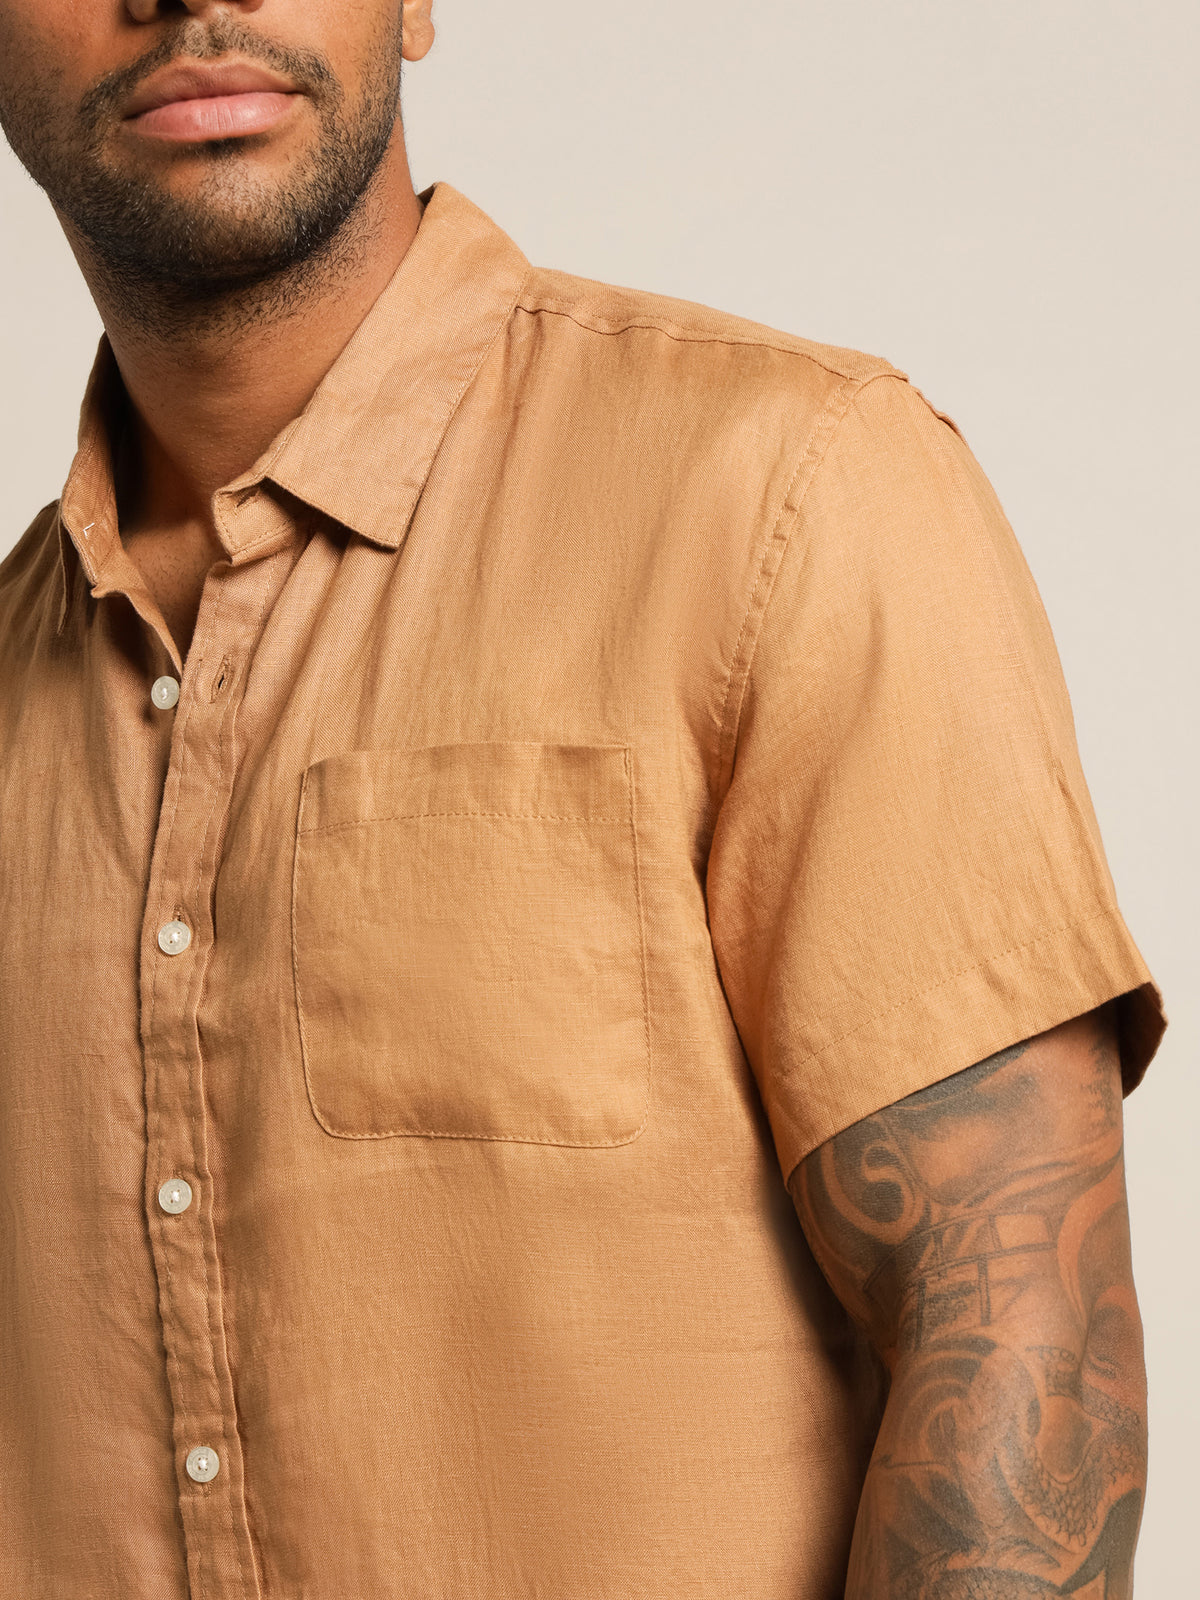 Nero Short Sleeve Linen Shirt in Caramel